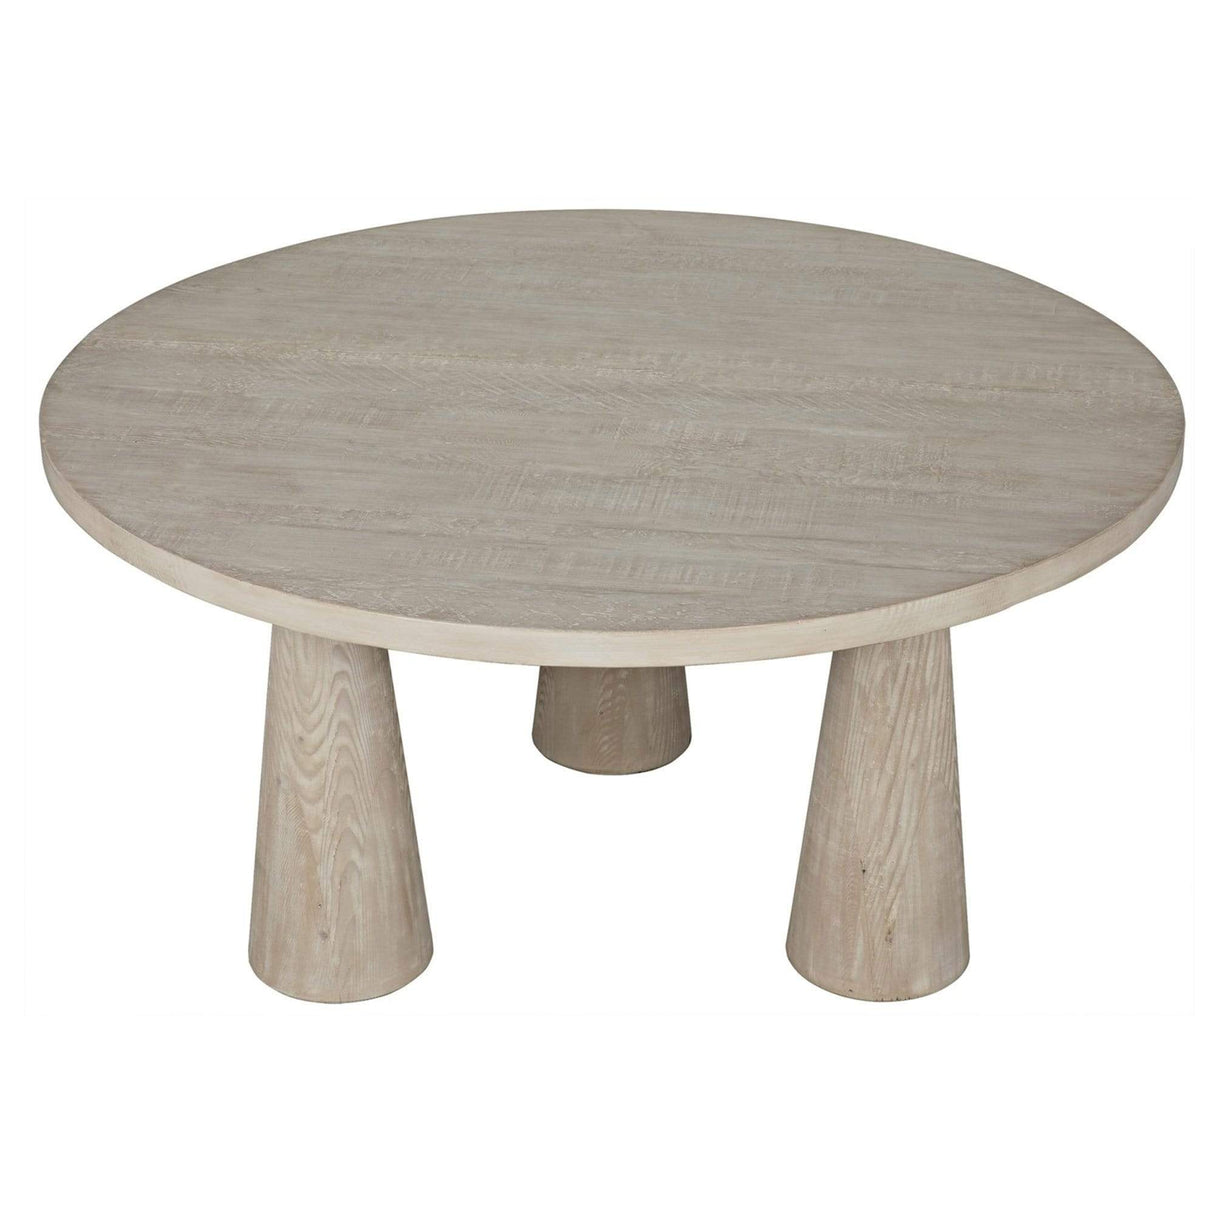 CFC David Dining Table - Gray Wash Furniture cfc-OW376